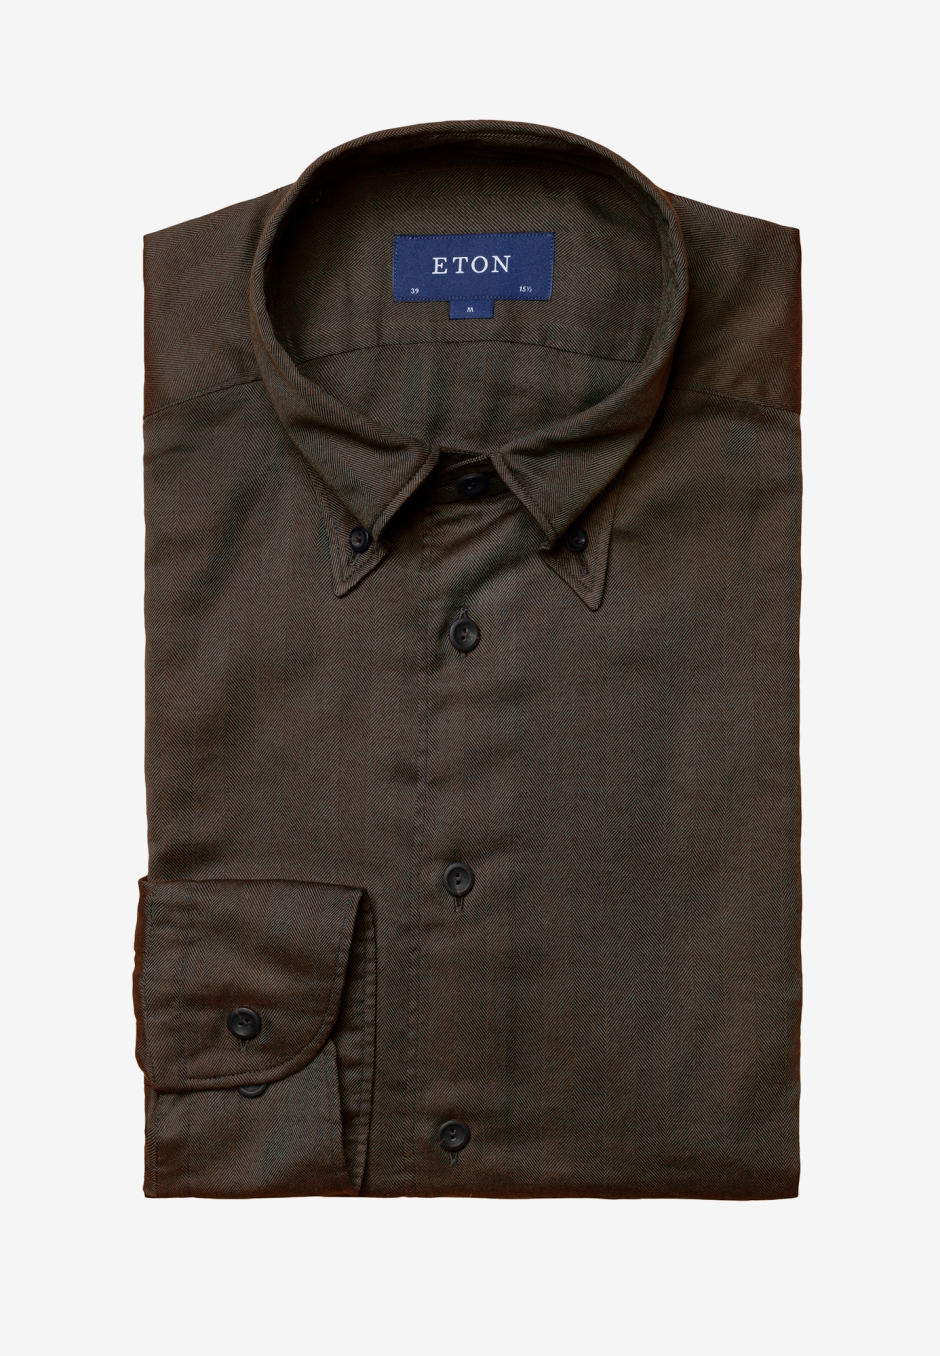 Eton Brown Herringbone Flannel Shirt